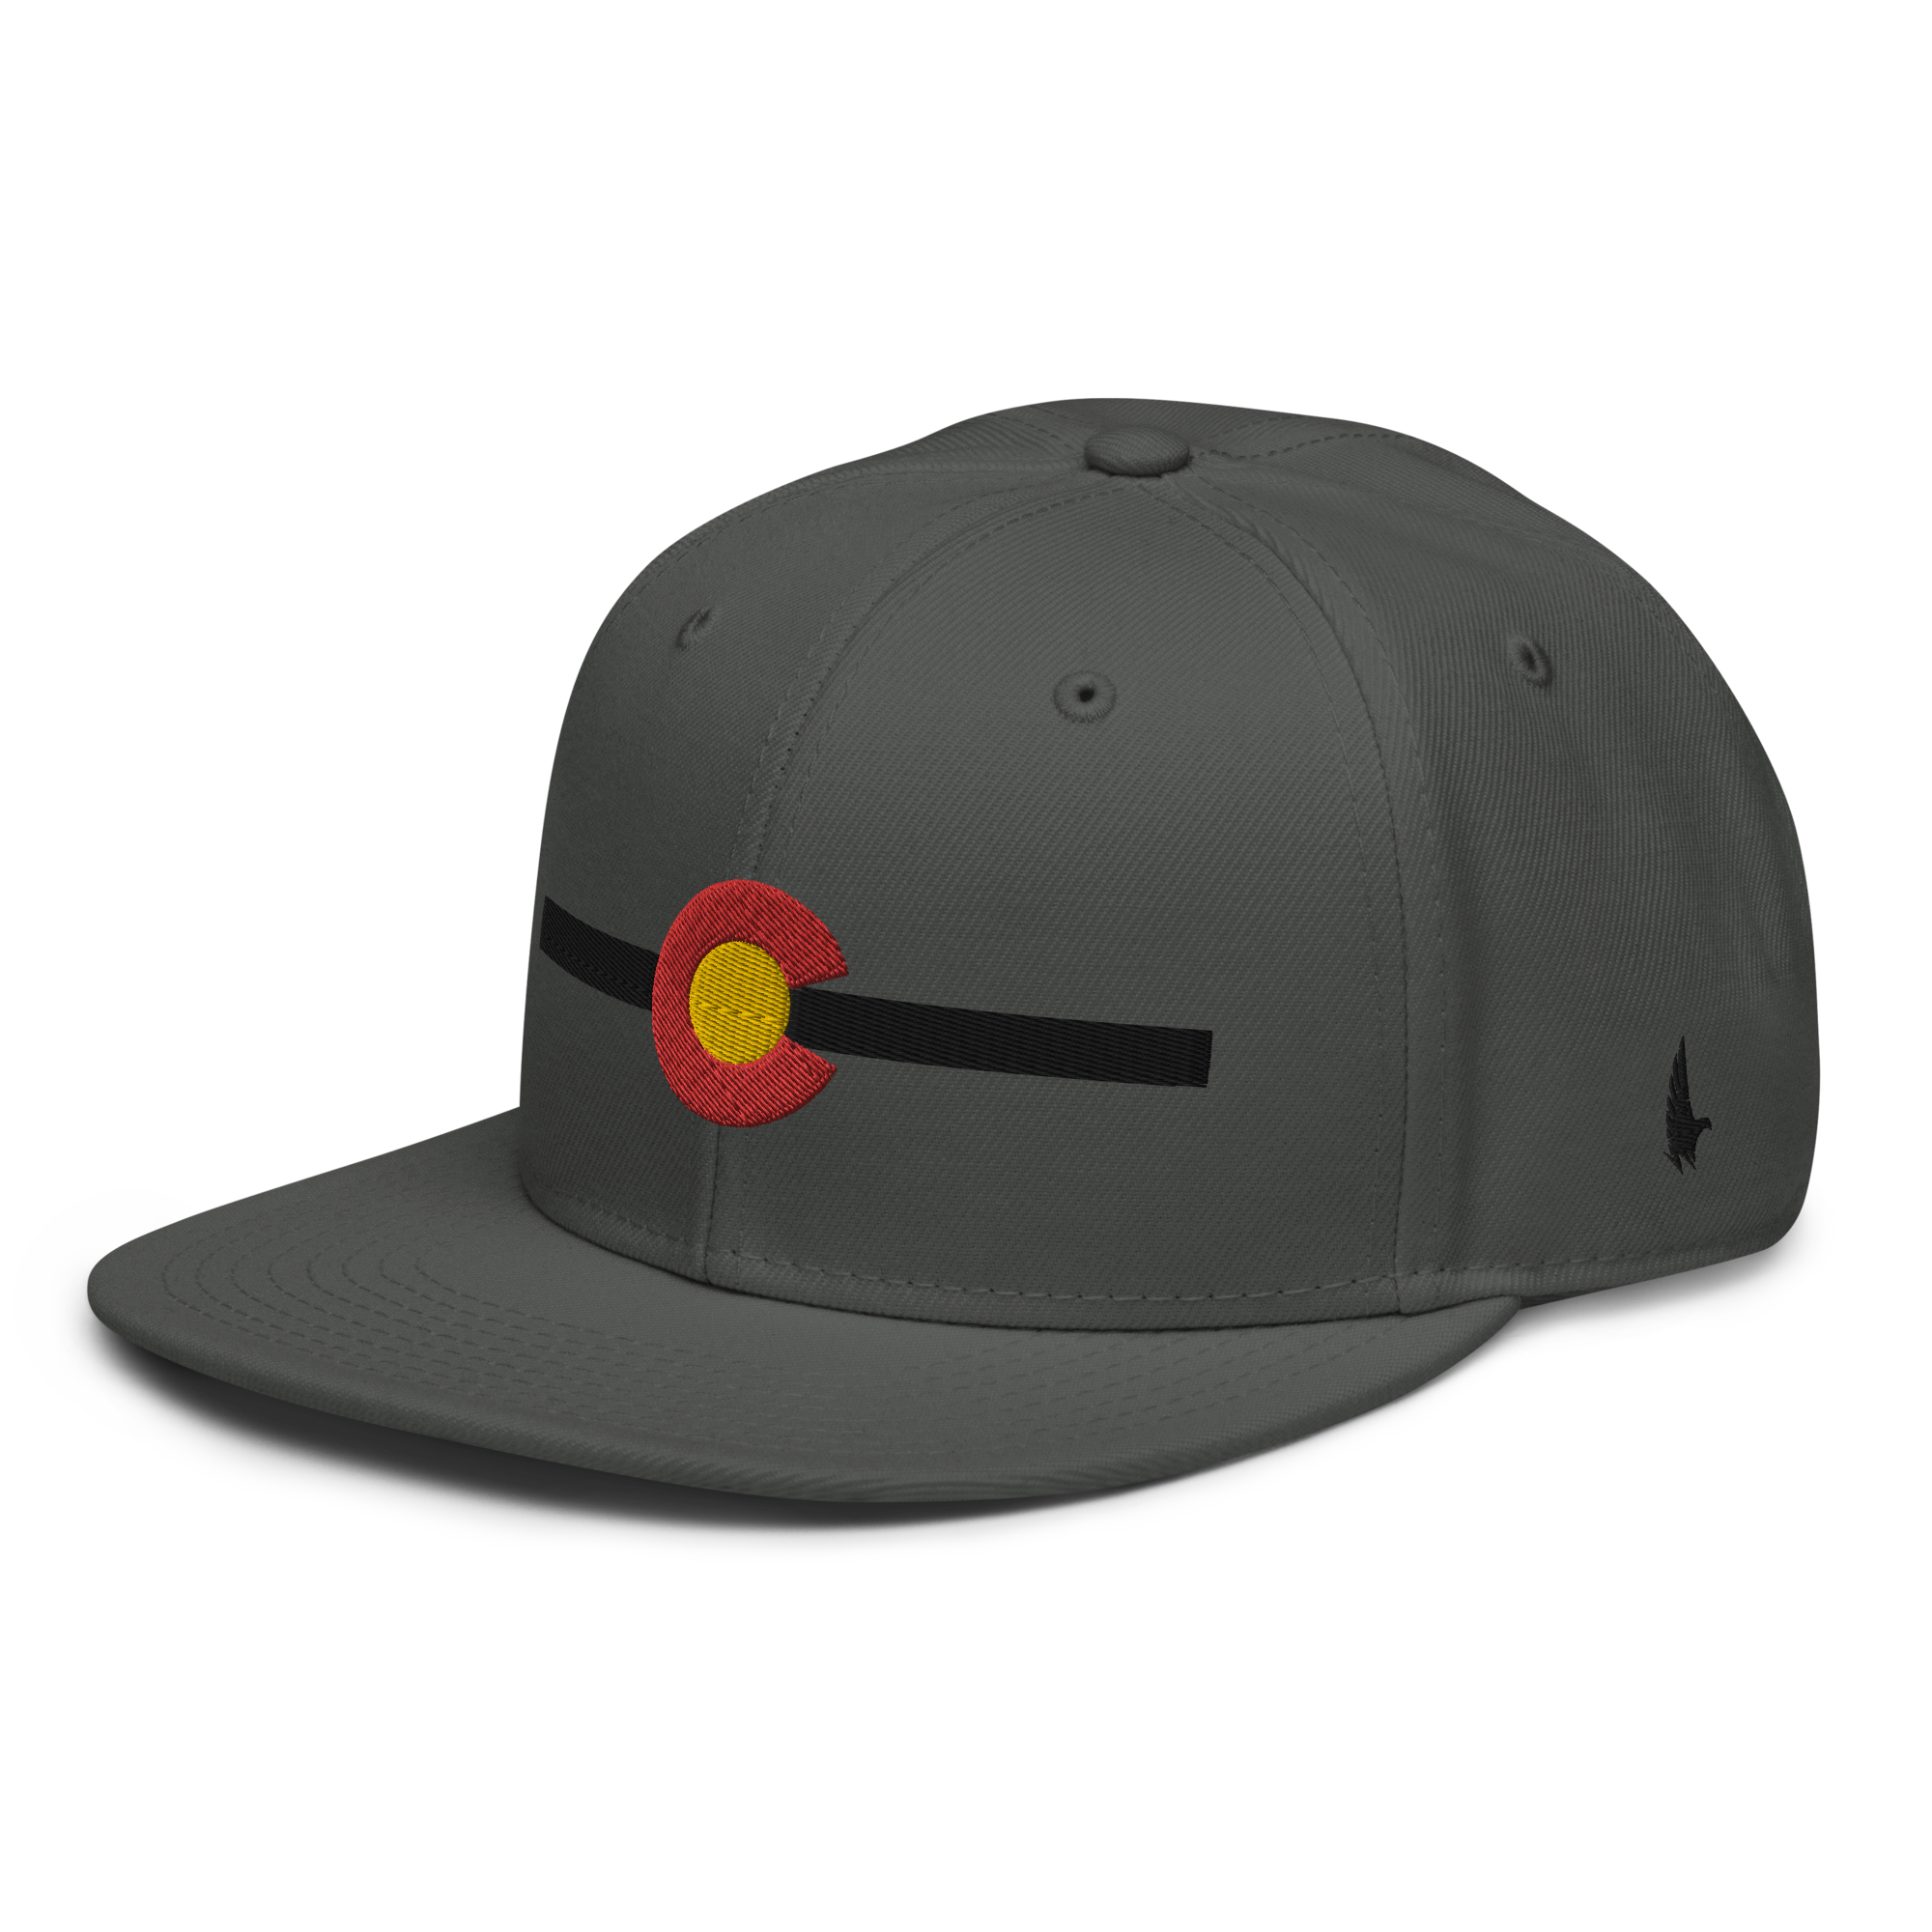 Classic Colorado Snapback Hat Charcoal Gray Black OS - Loyalty Vibes